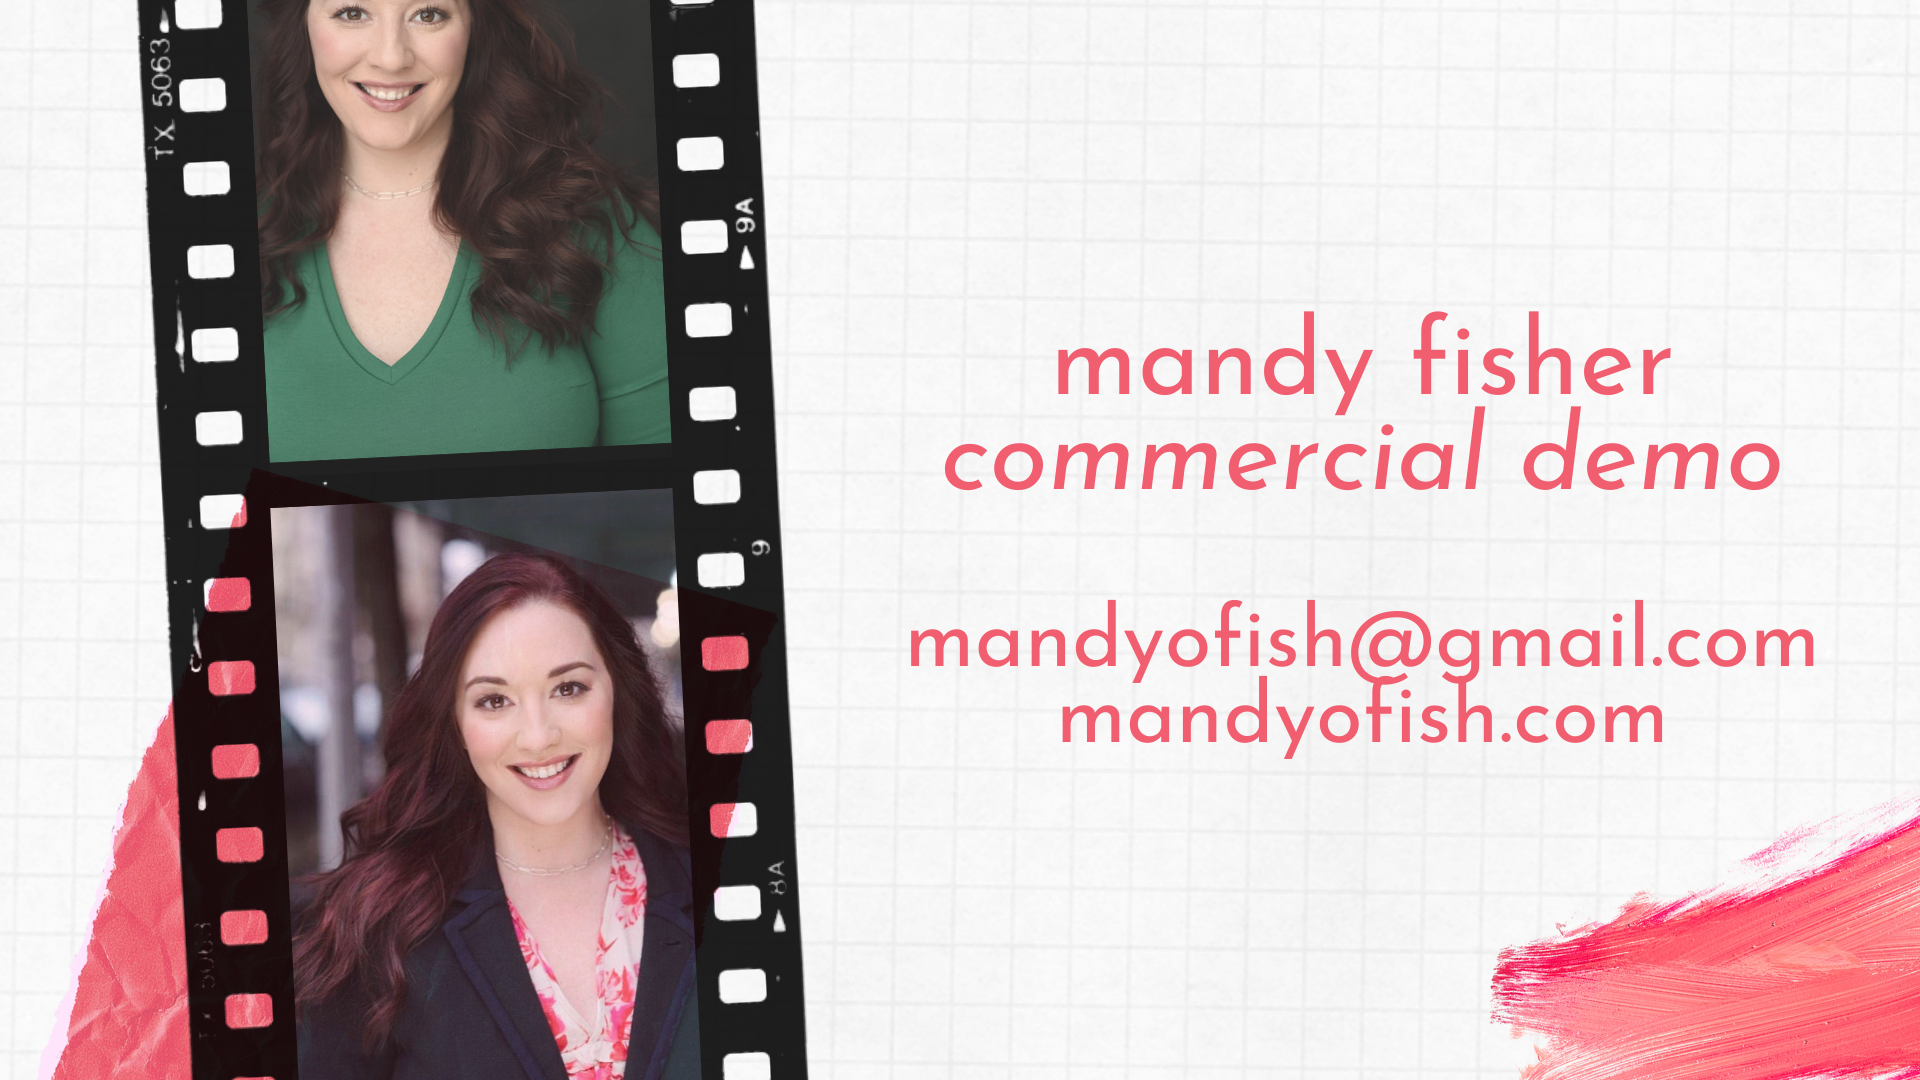 Mandy fisher actress